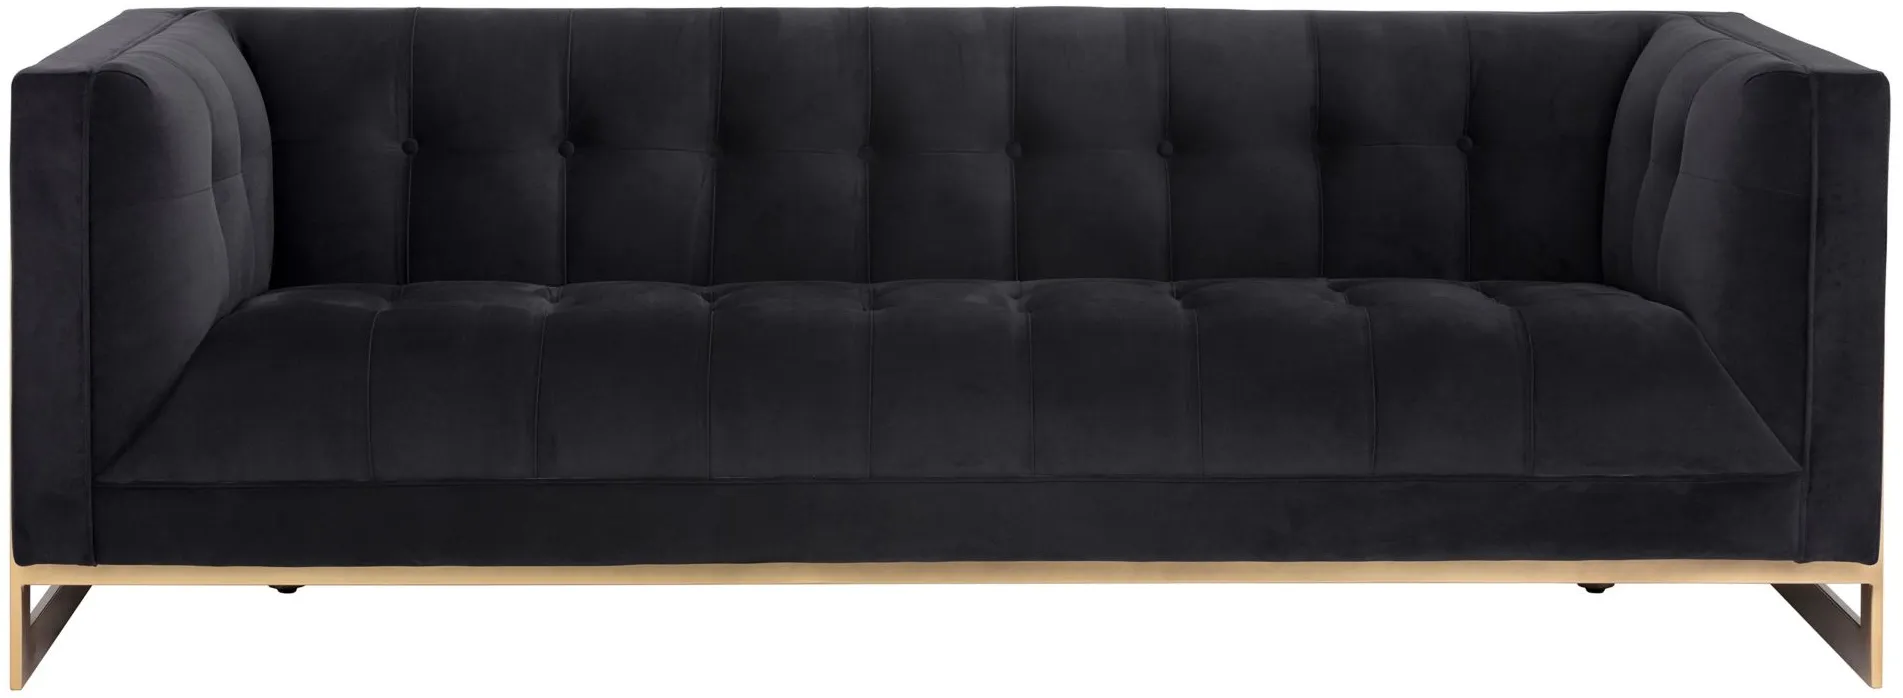 Ekon Sofa in Abbington Black by Sunpan